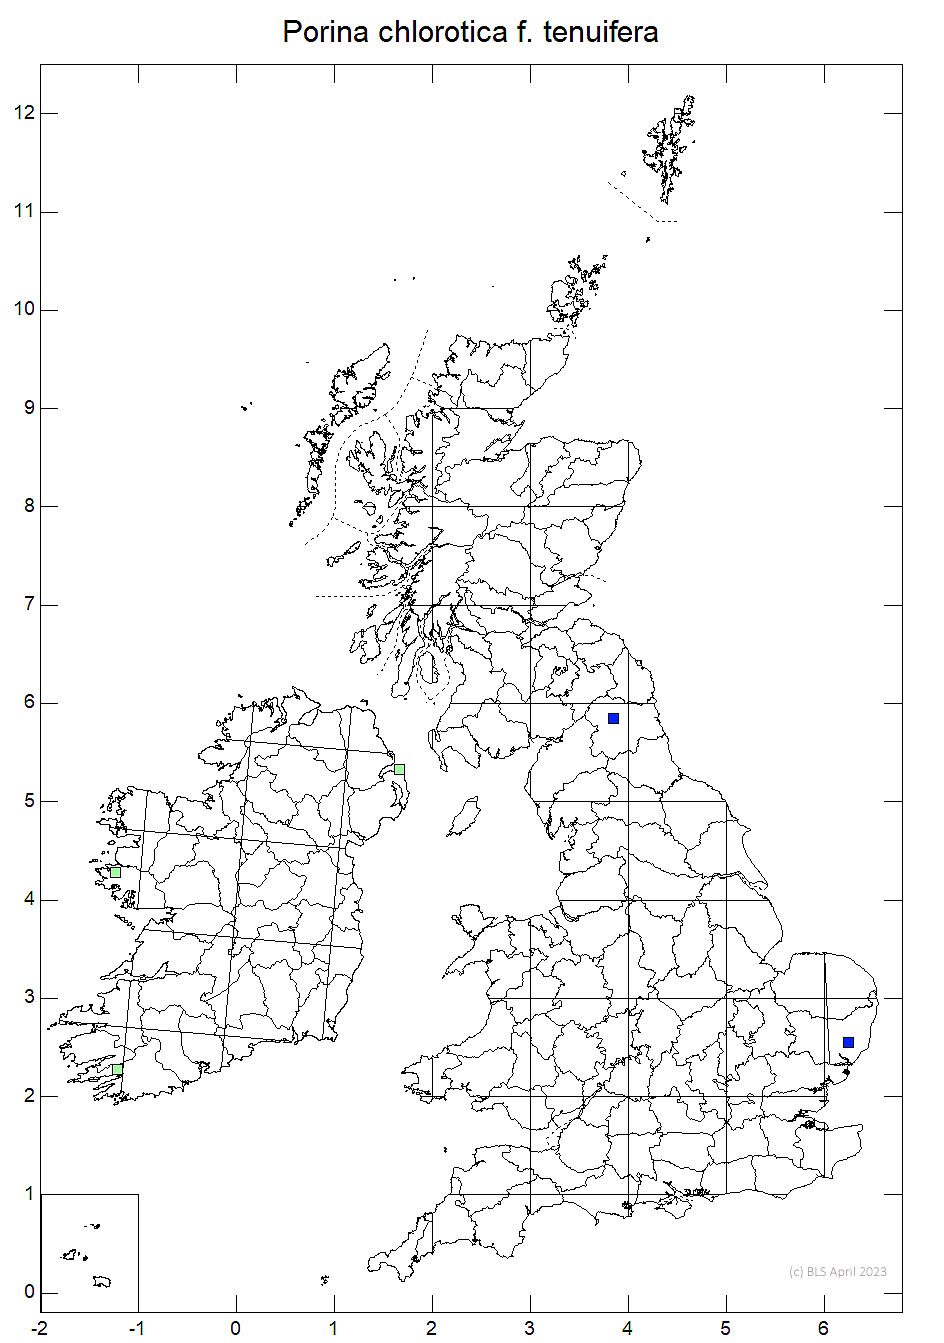 Porina chlorotica f. tenuifera 10km sq distribution map